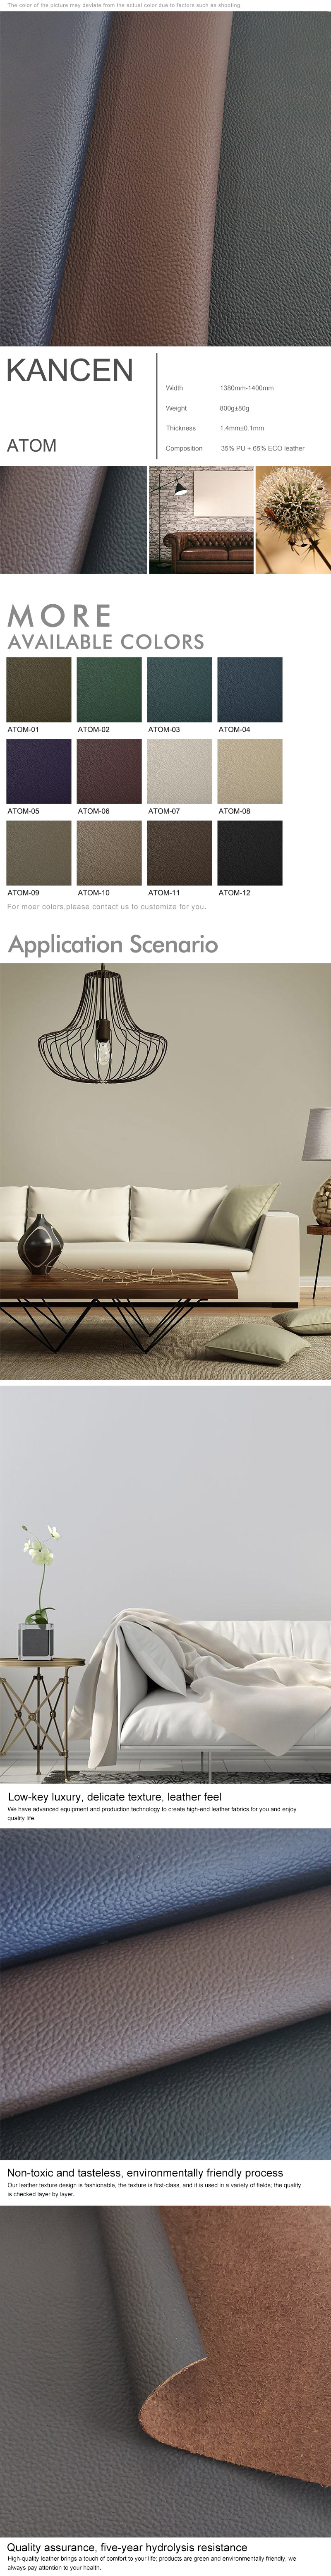 Solvent-free sofa leather design - KANCEN